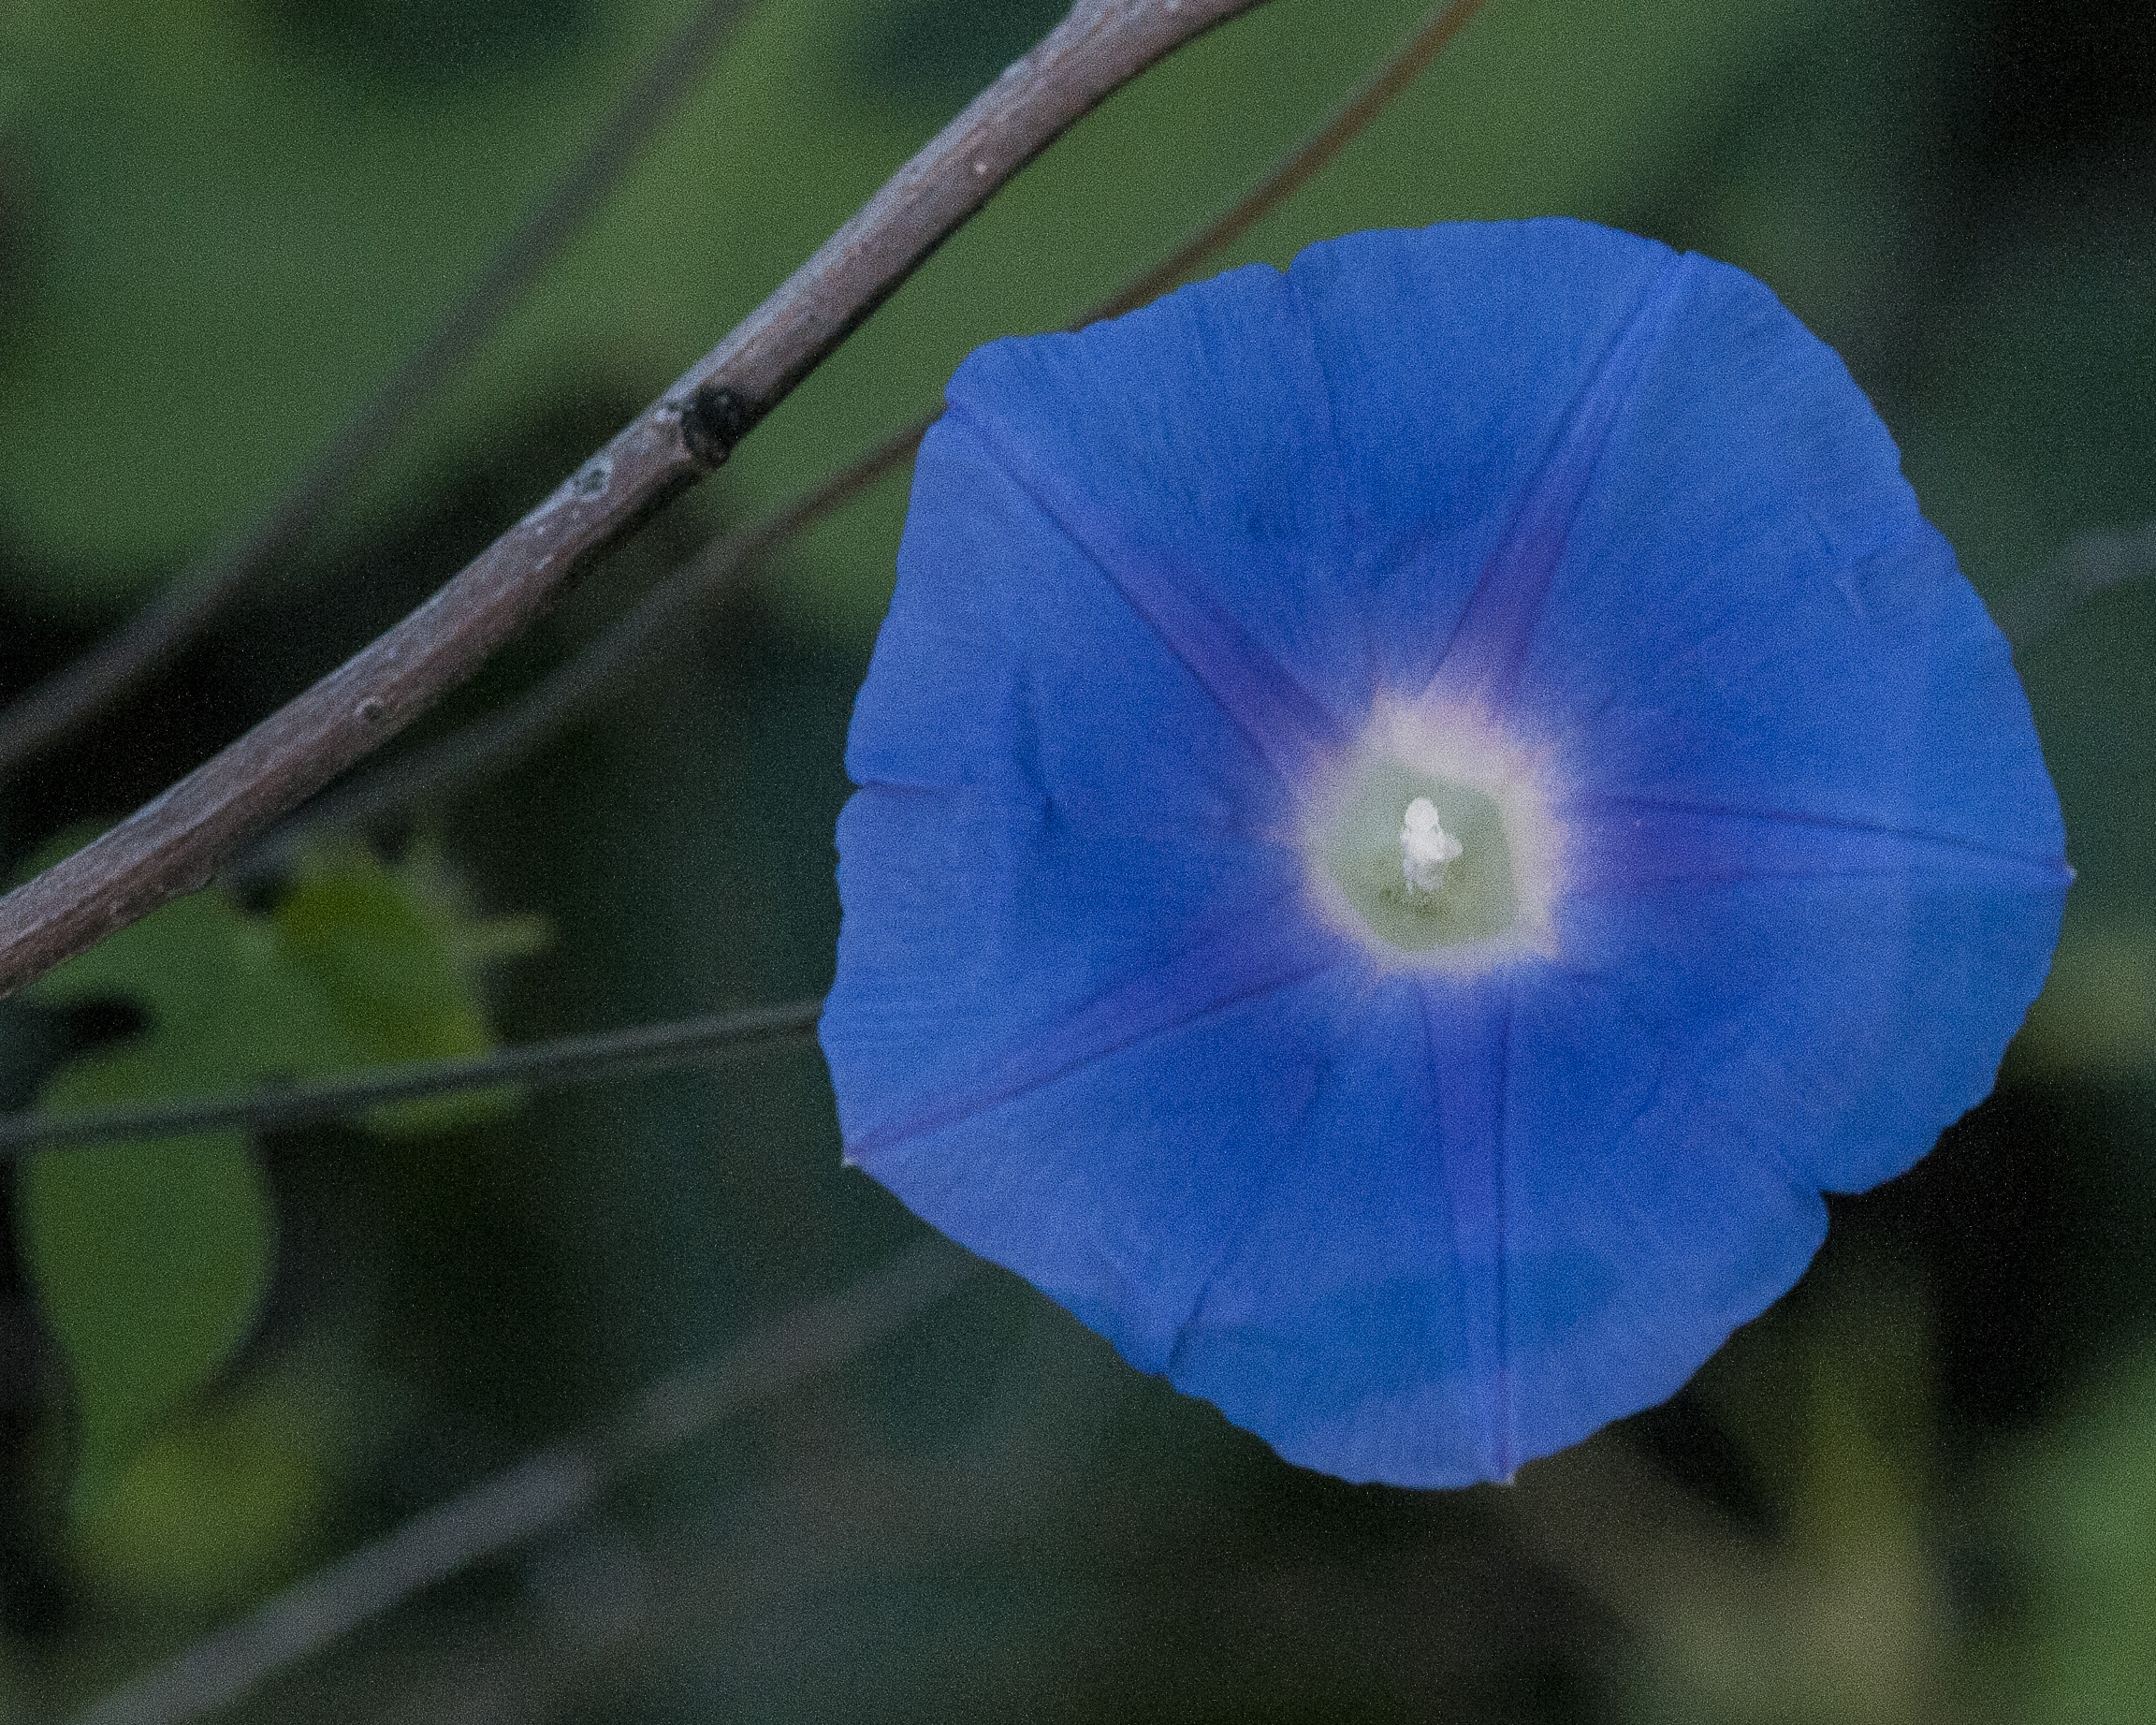 Ivyleaf Morning-glory Flower